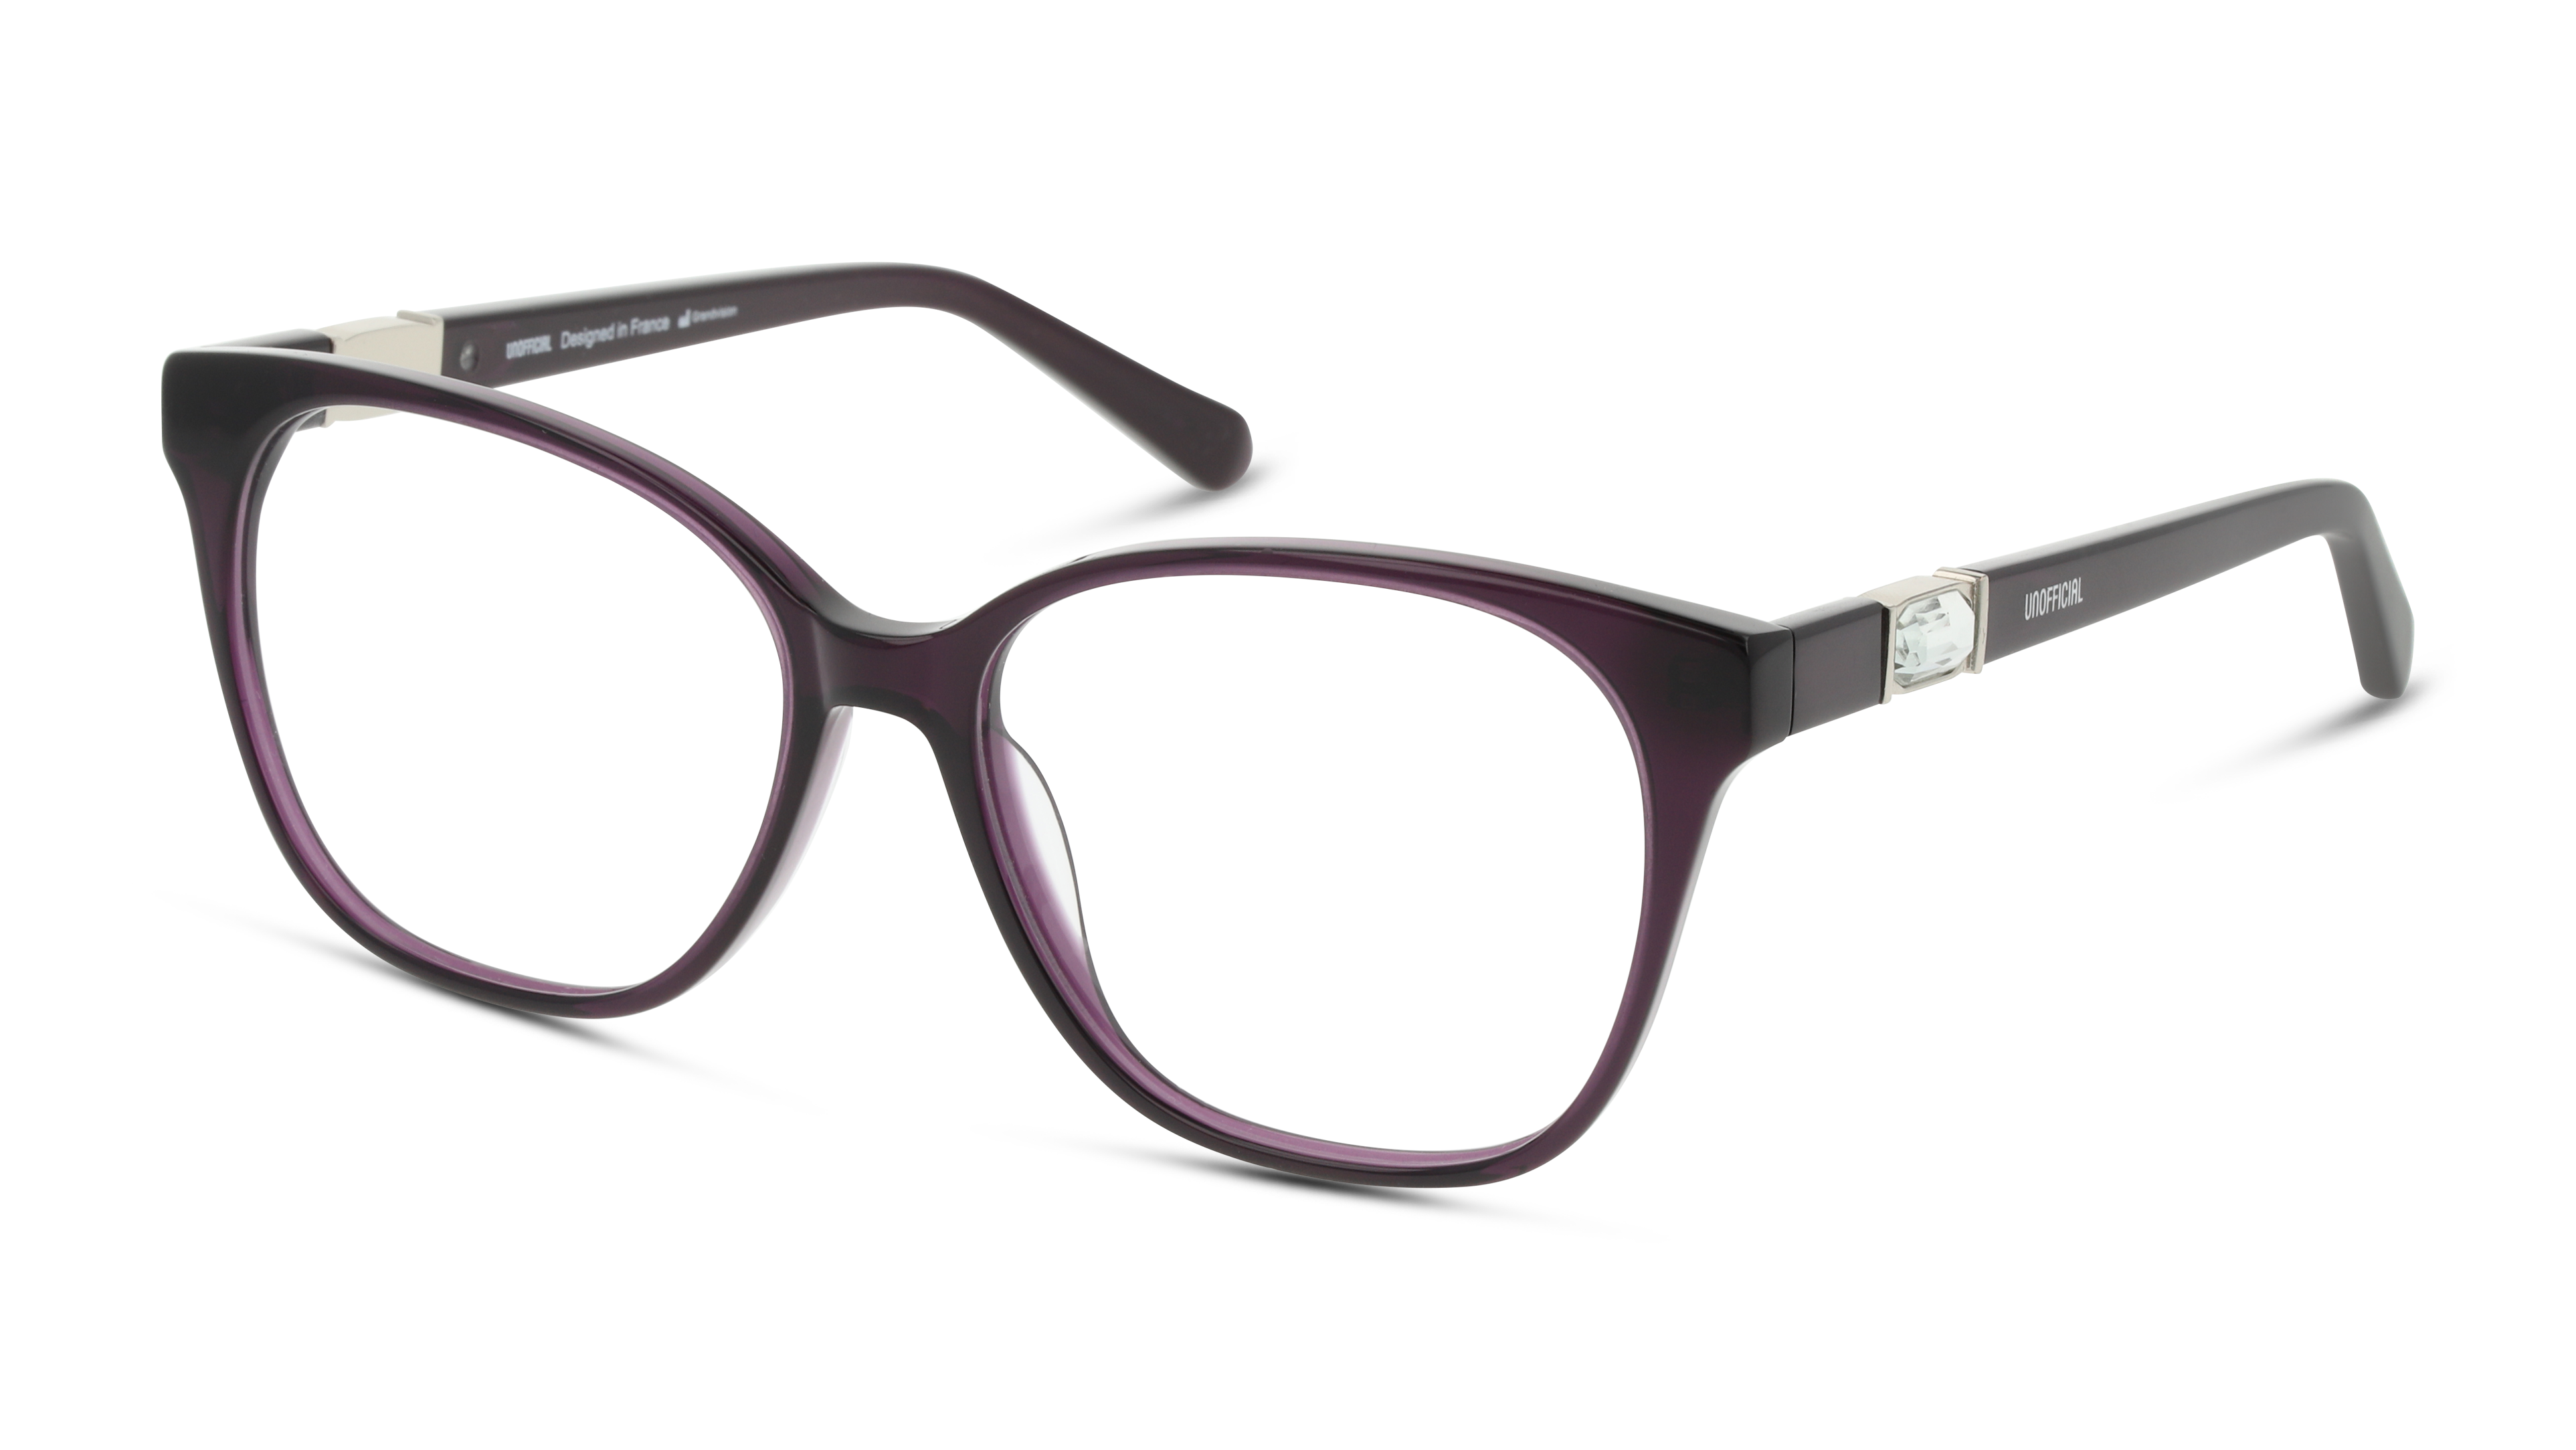 Angle_Left01 Unofficial UNOF0458 (VV00) Glasses Transparent / Violet